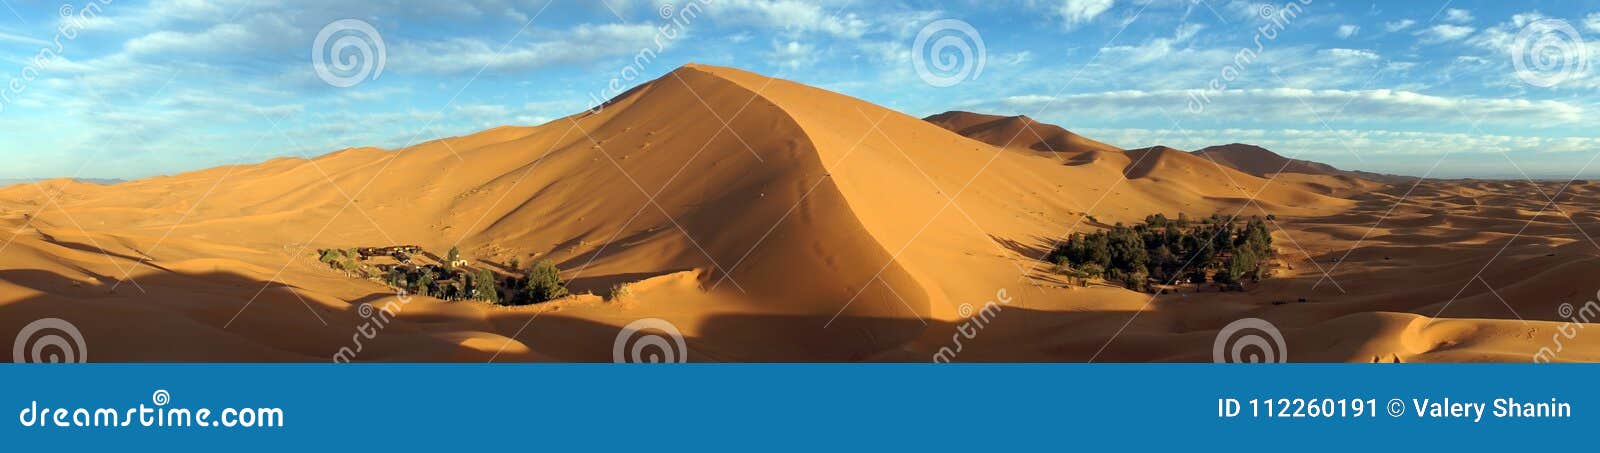 Two oasises in Sahara stock image. Image of shadow, sahara ...